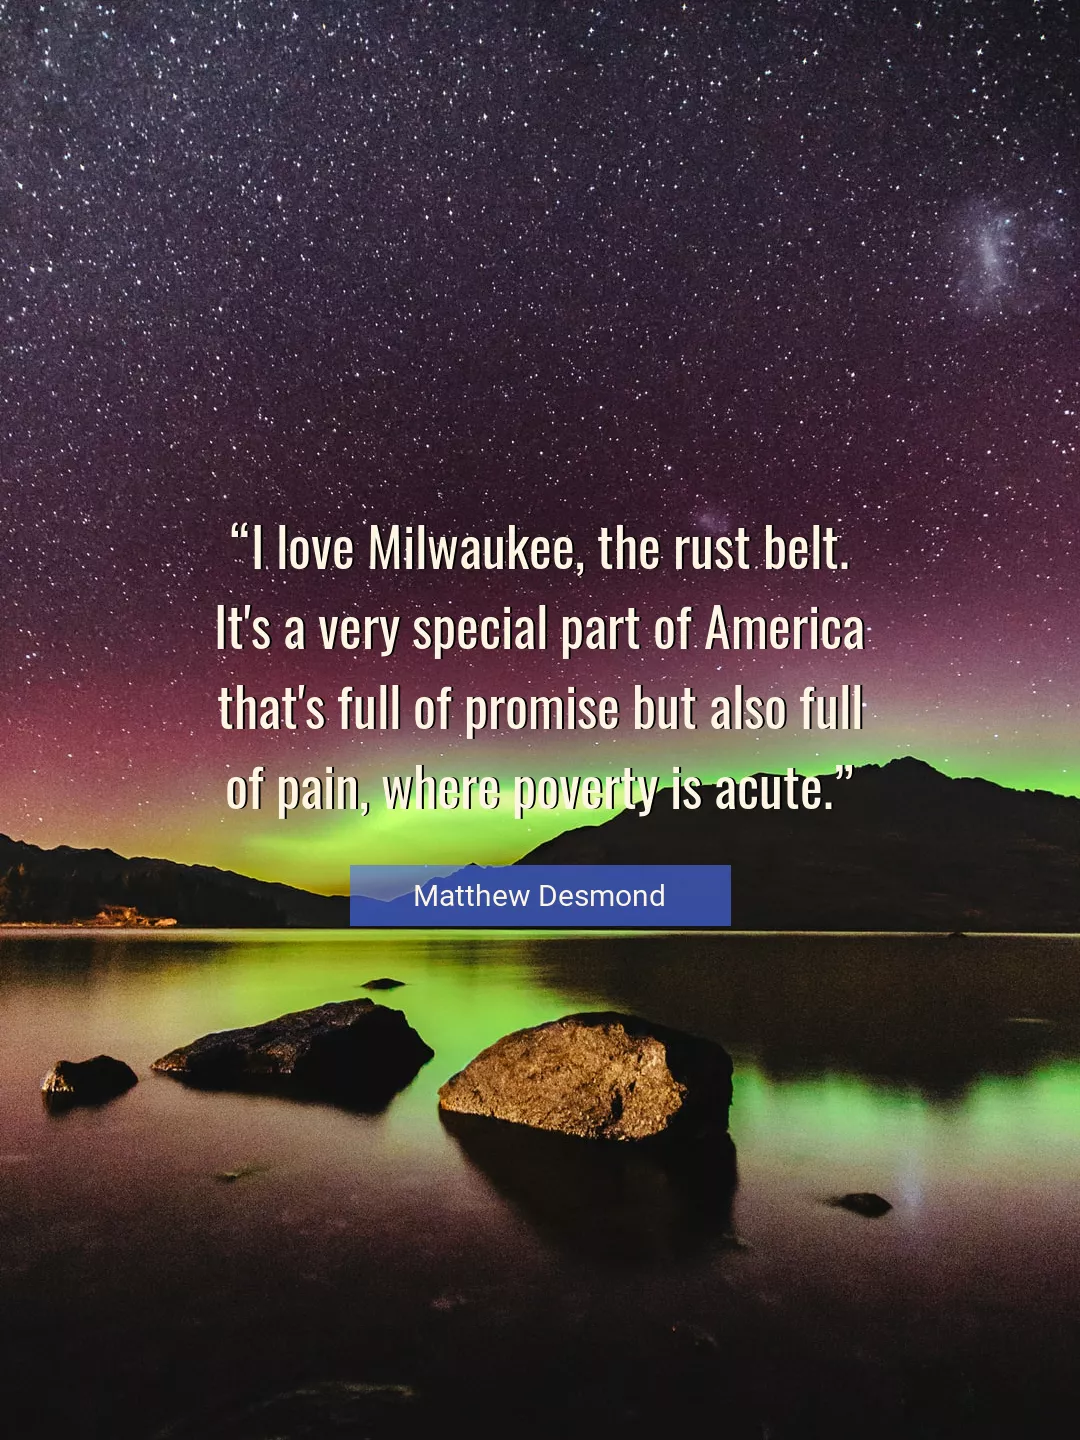 Quote About Love By Matthew Desmond